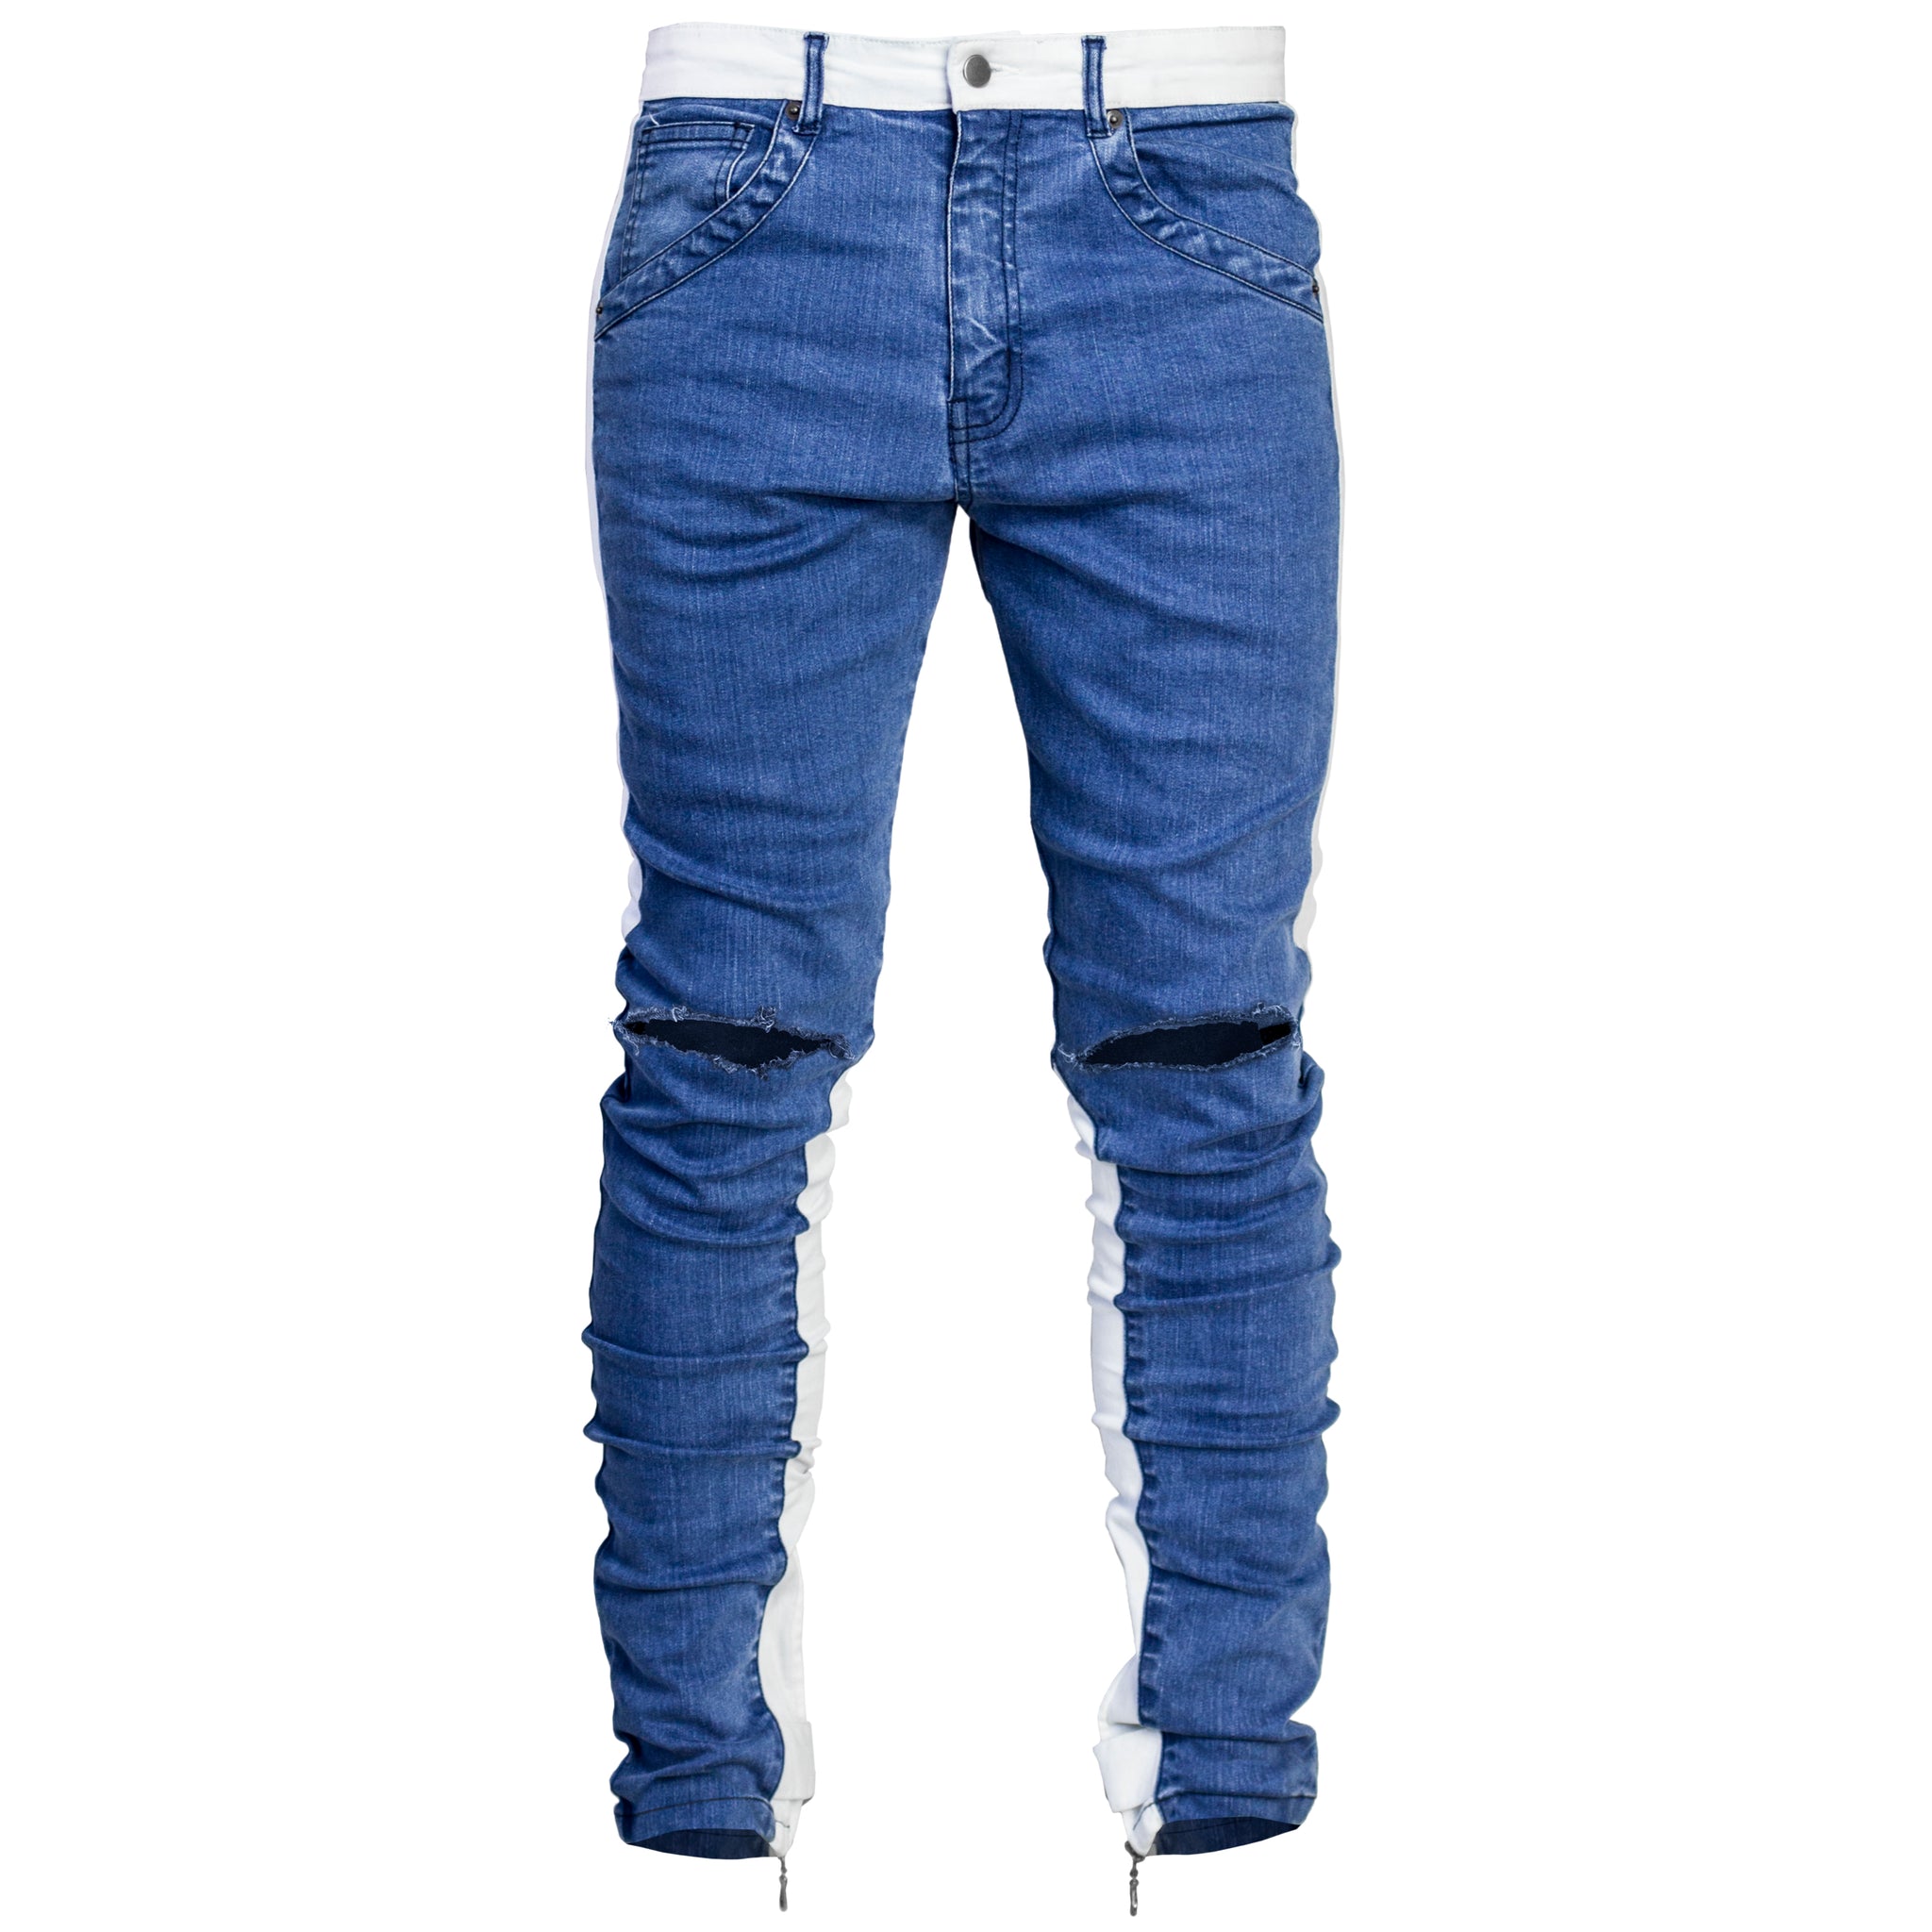 DSDZ Men's Fashion Hi Street Jeans Pants Knee Zippers Black 30 at Amazon  Men's Clothing store